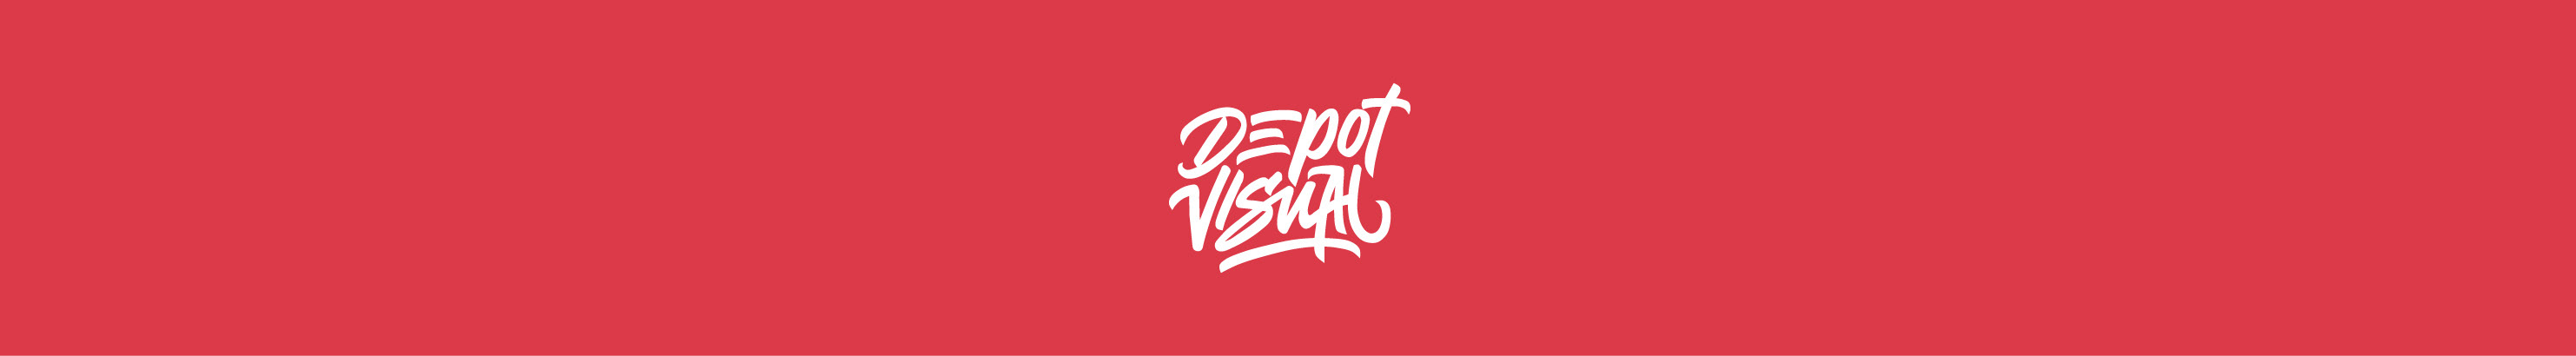 Depot Visual Std's profile banner